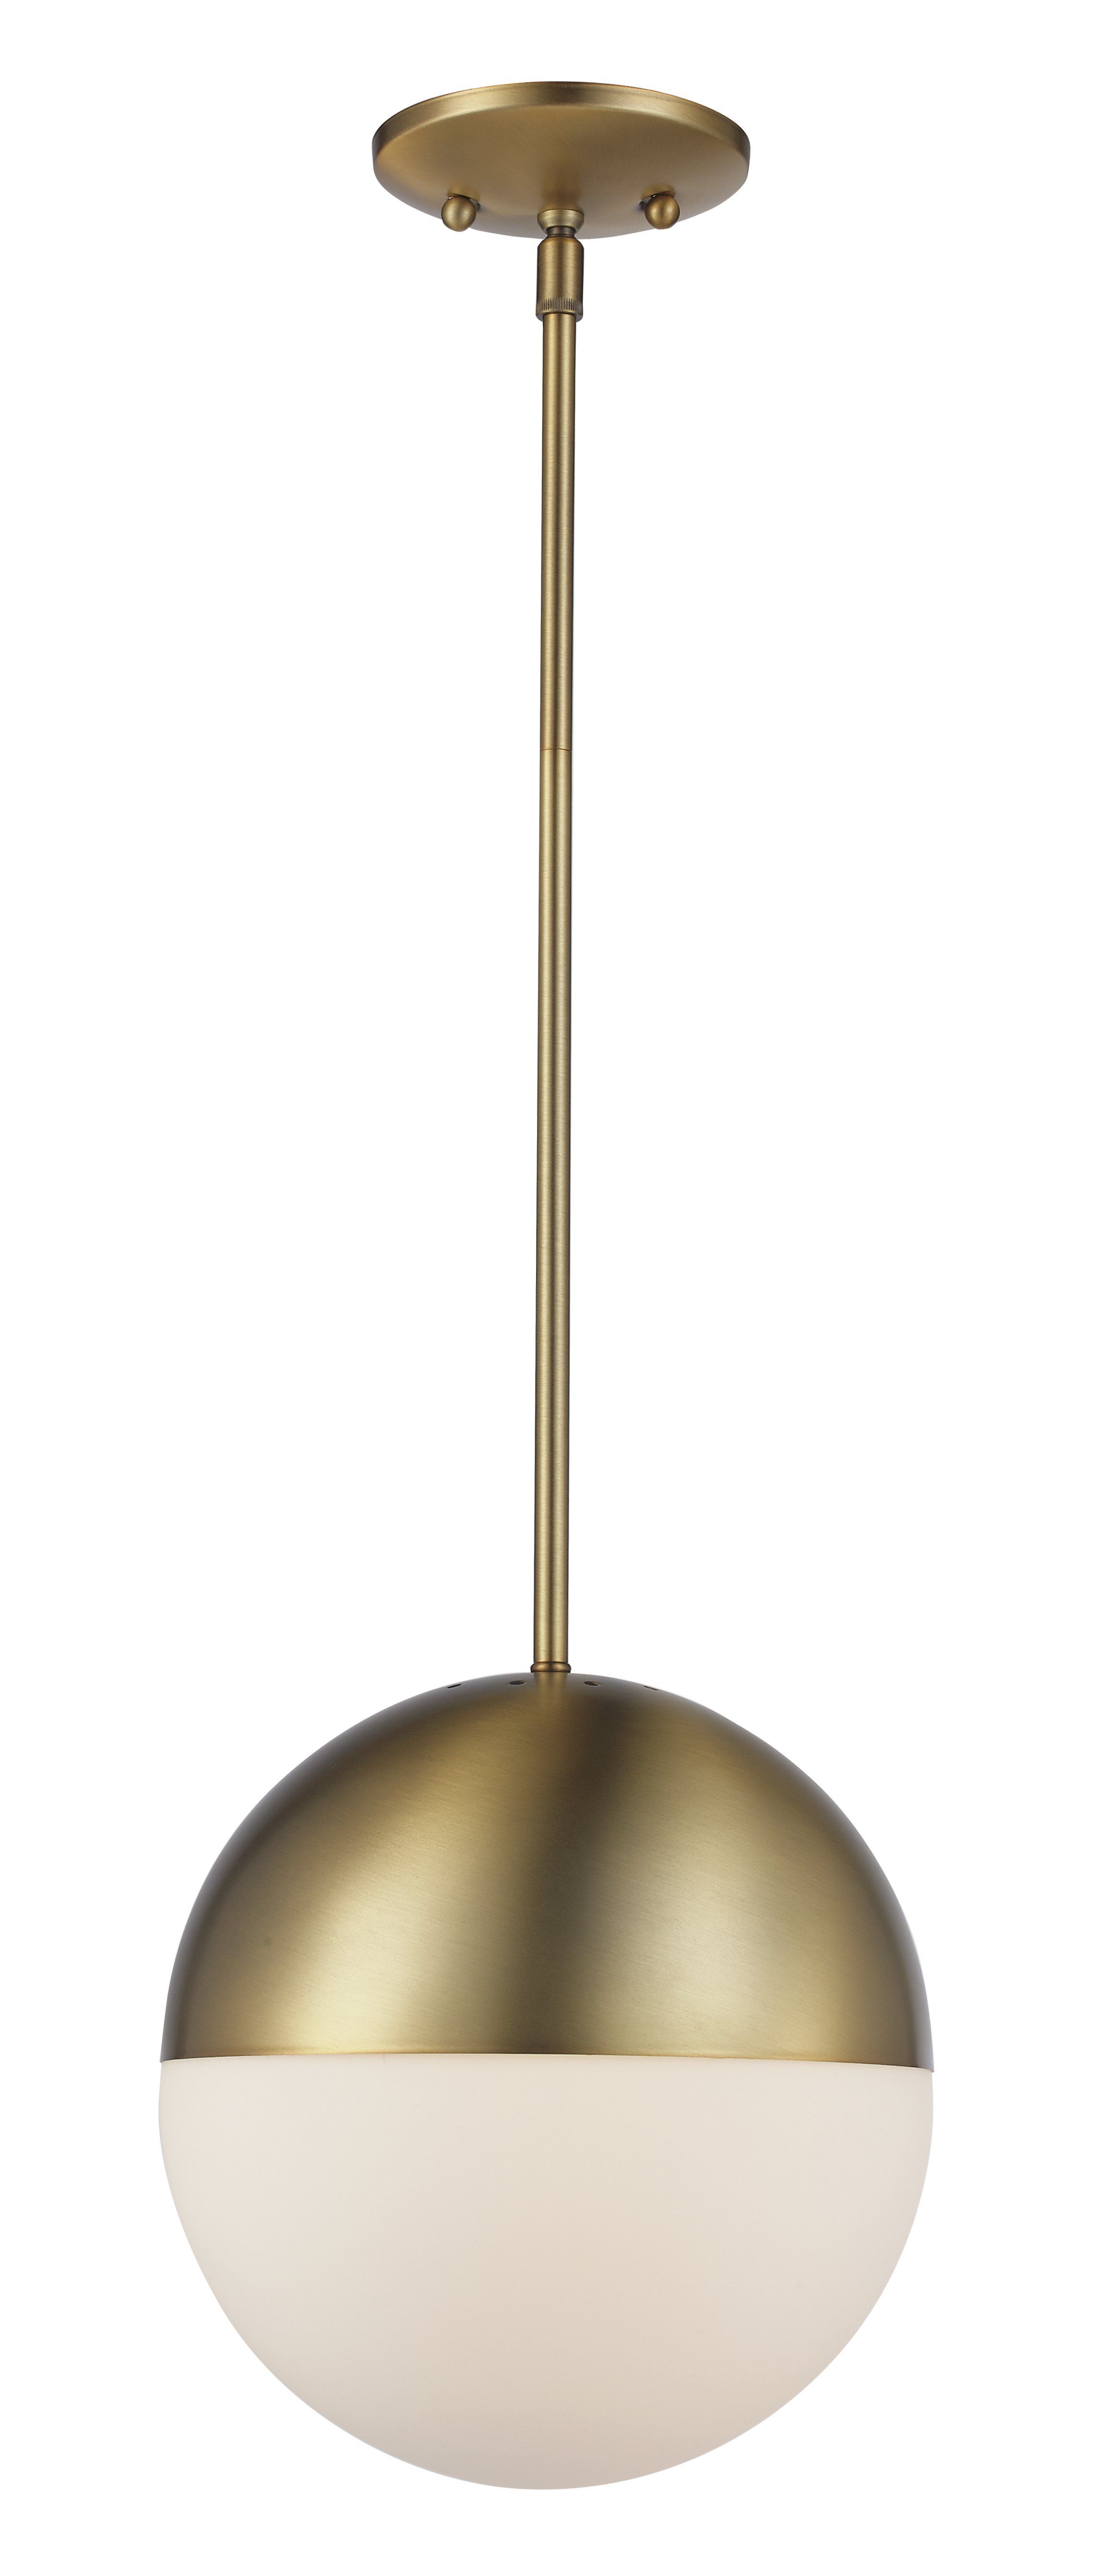 Rolando 1 Light Single Globe Pendant Throughout Betsy 1 Light Single Globe Pendants (View 26 of 30)